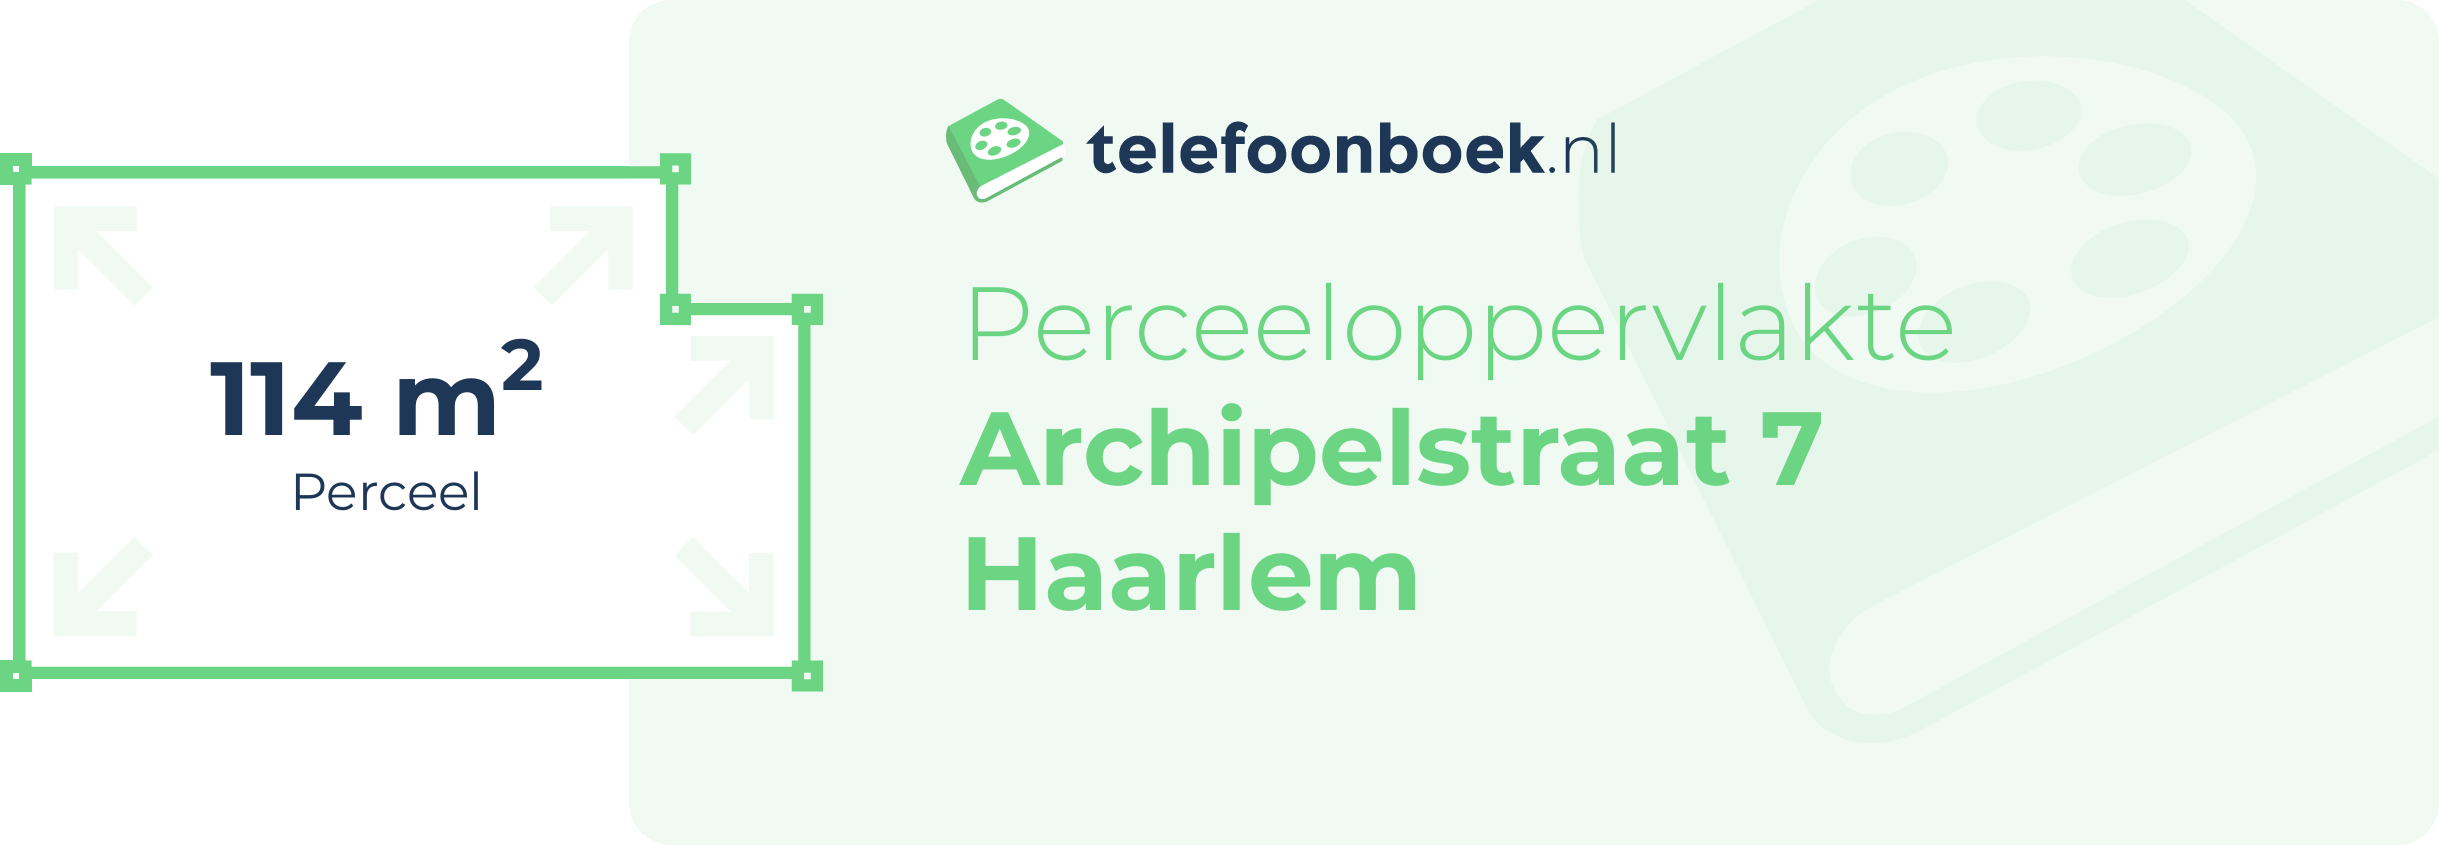 Perceeloppervlakte Archipelstraat 7 Haarlem